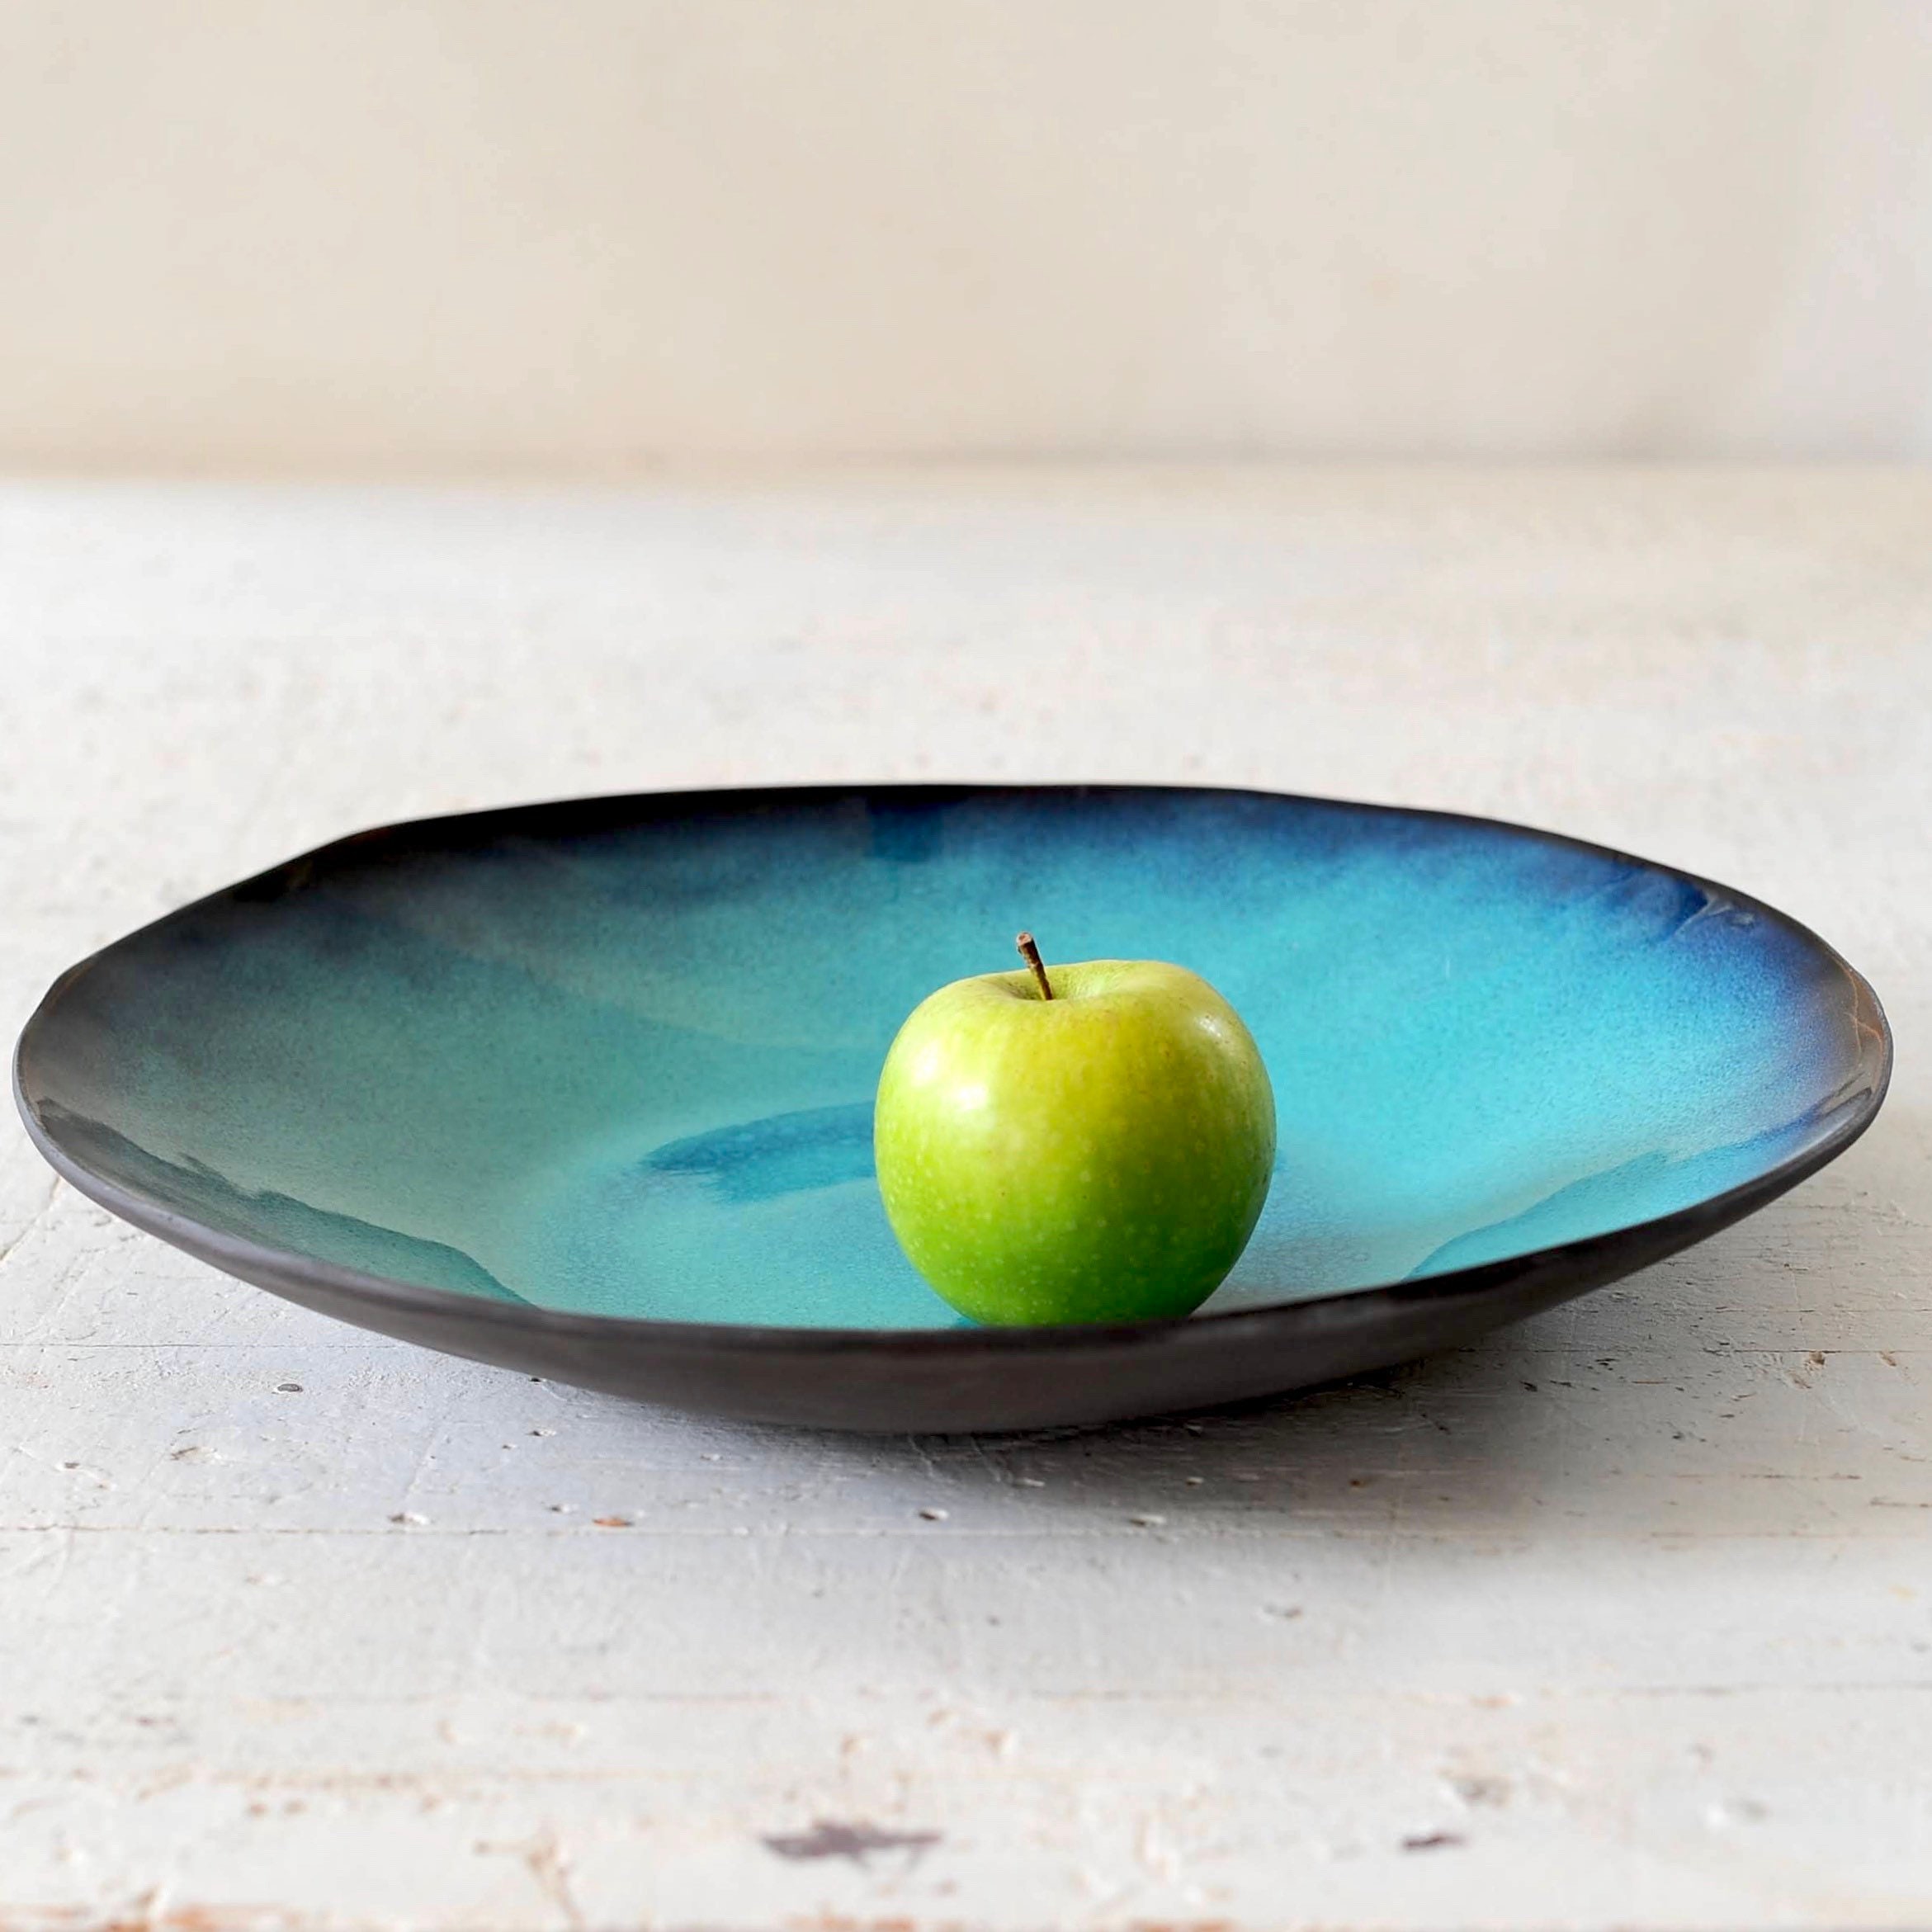 Bowls - Plates - Centerpieces Glass: Deep Blue - Centerpiece Bowl